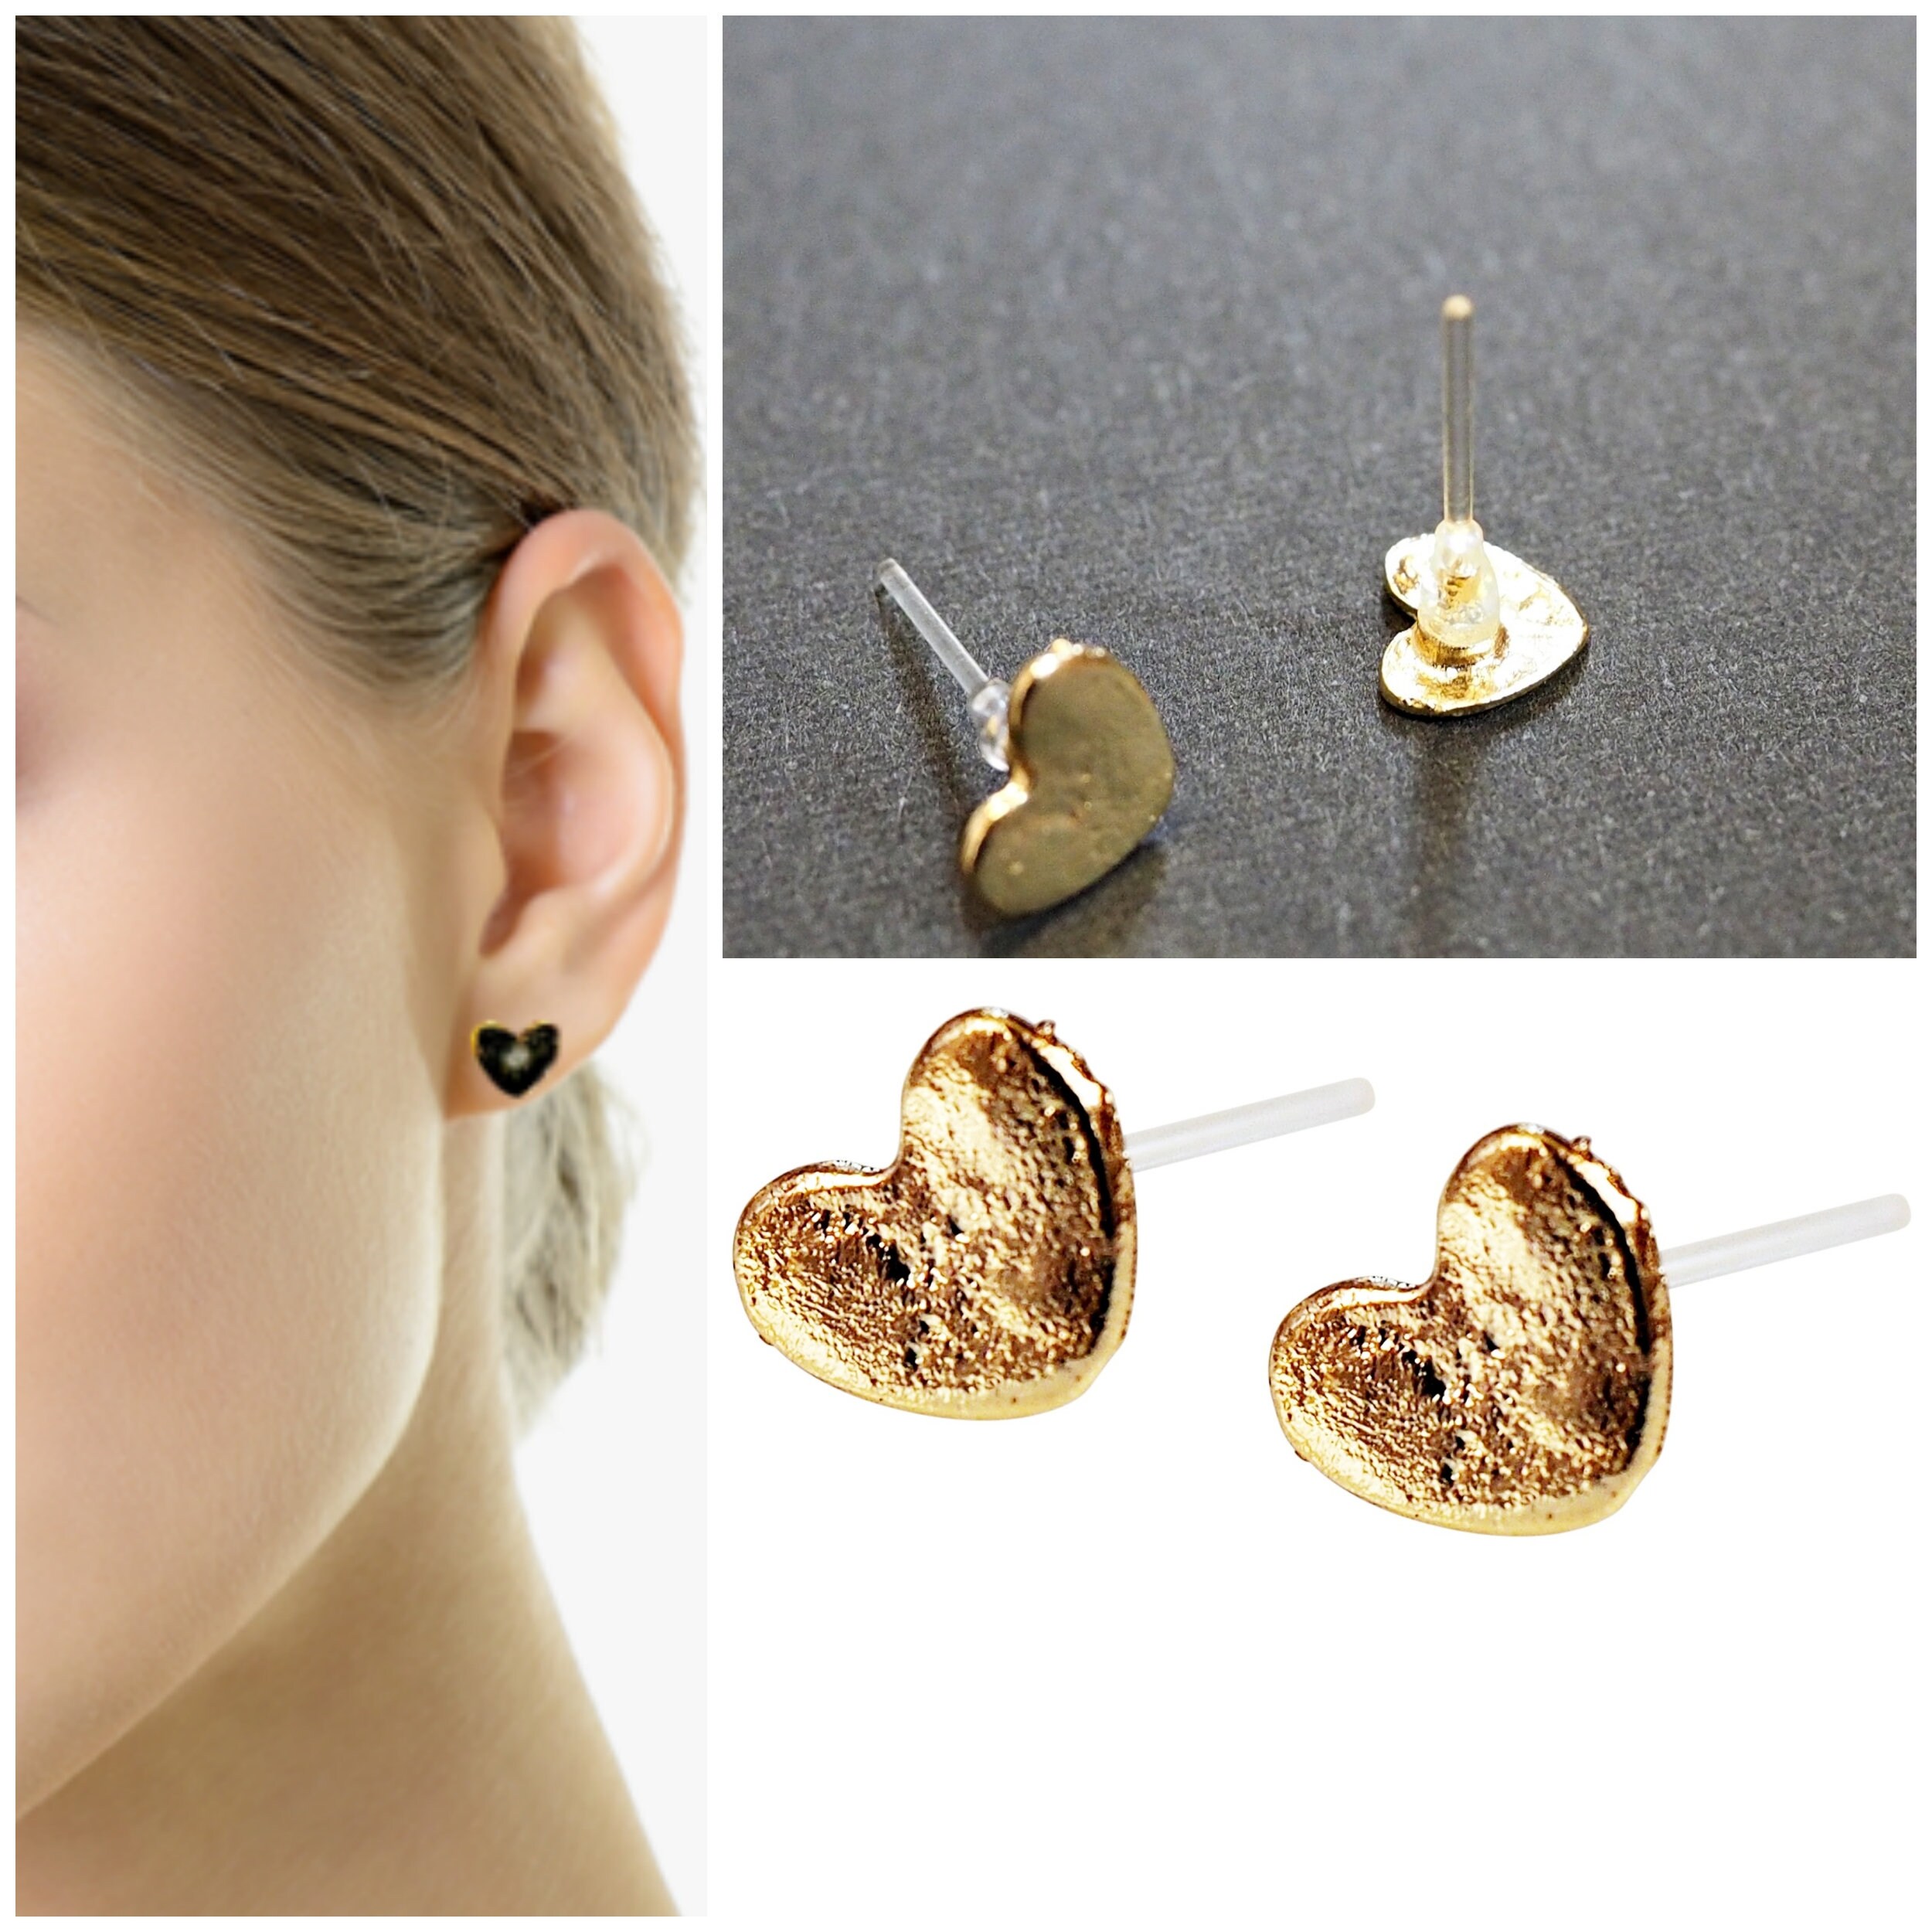 Plastic Earrings, KMEOSCH 2 Pairs Bling Plastic Bowtie Earrings Studs for  Sensitive Ears in Gift Packaging - Stylish & Comfortable